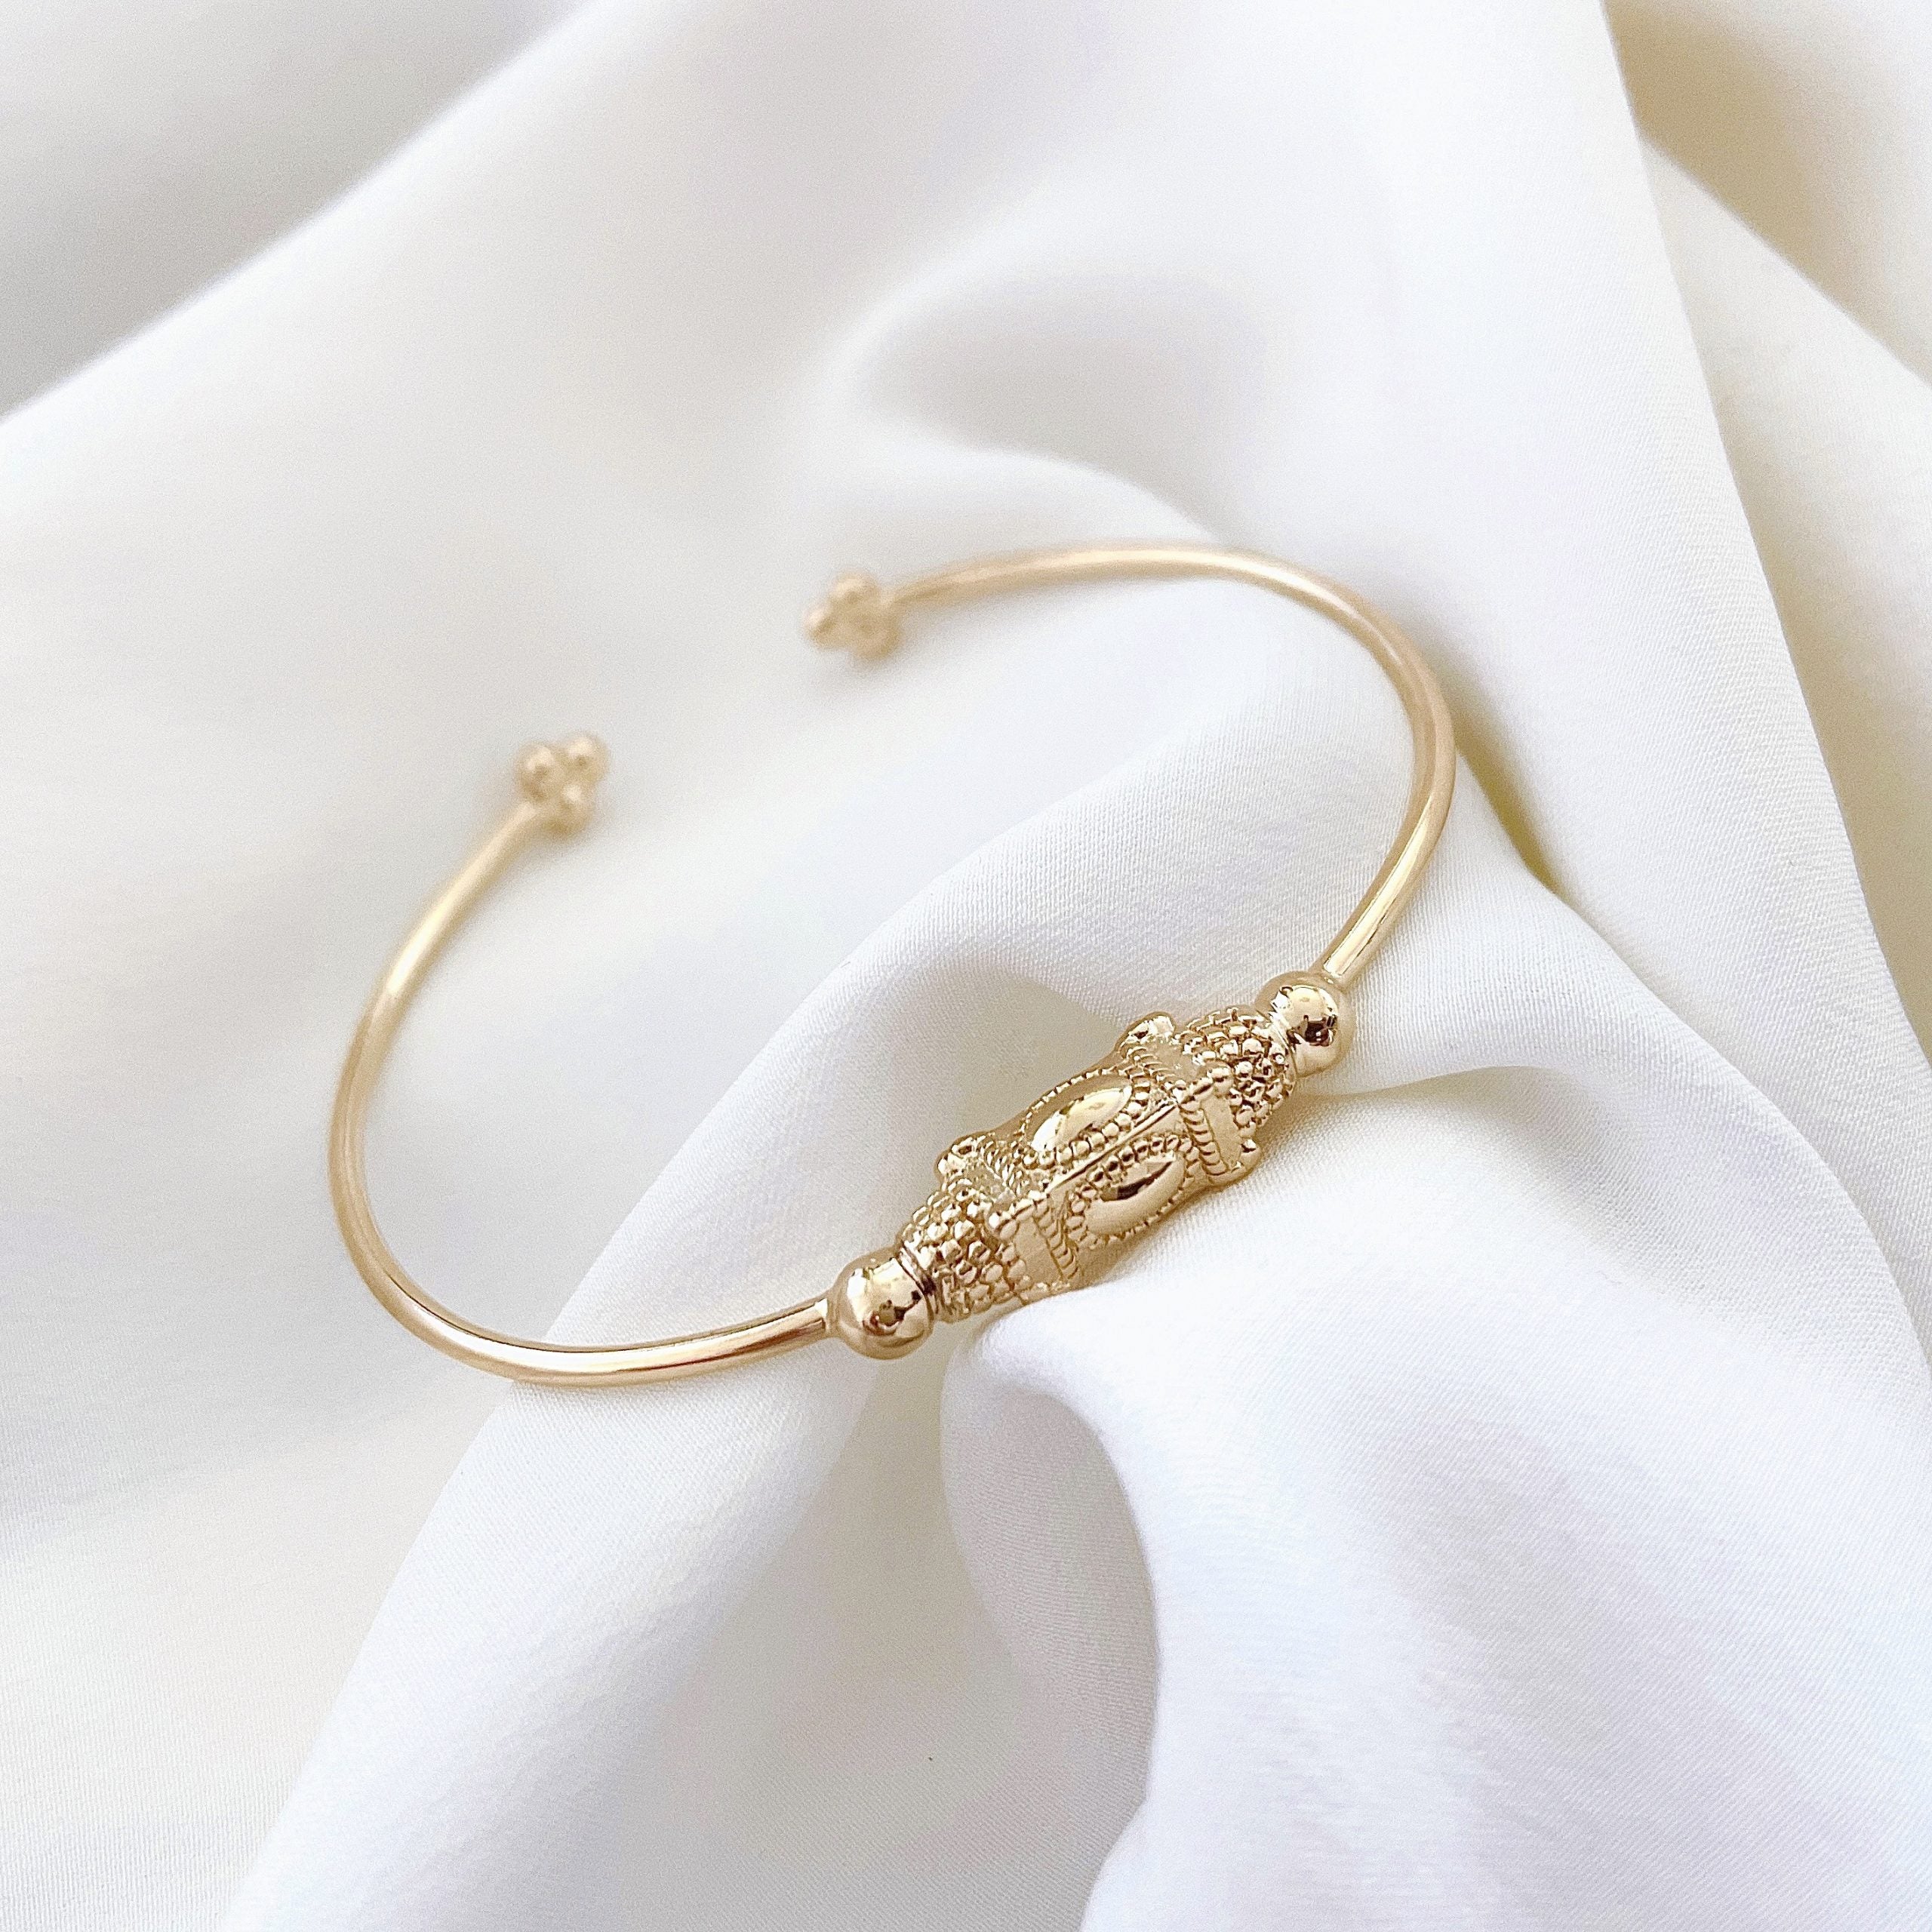 Gold-plated “Gigi” bracelet